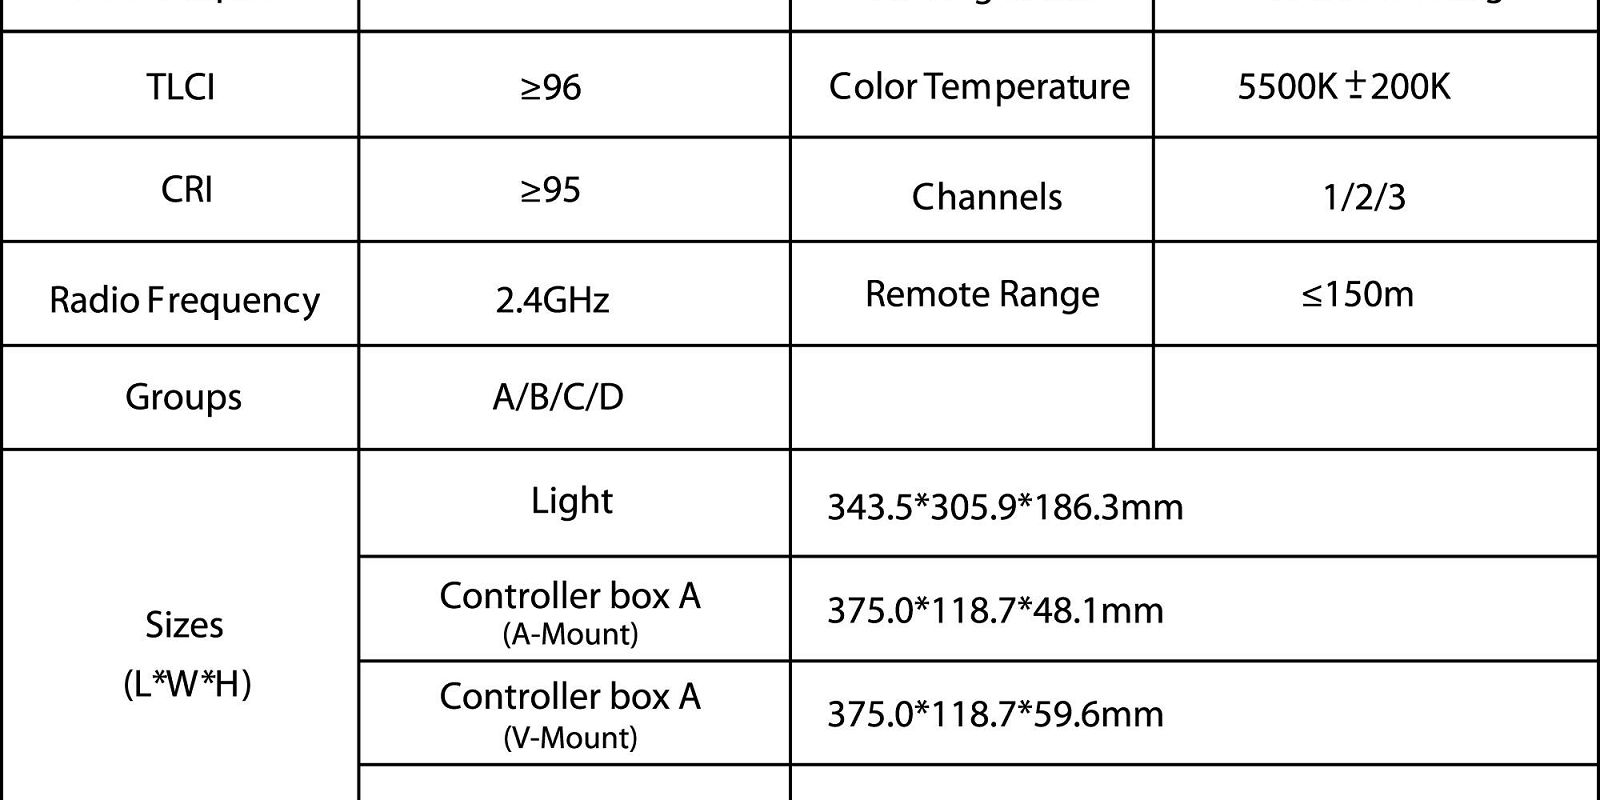 Aputure Light Storm LS-C300d II (V-mount) LED video light C300D CRI96 kontinuirana rasvjeta